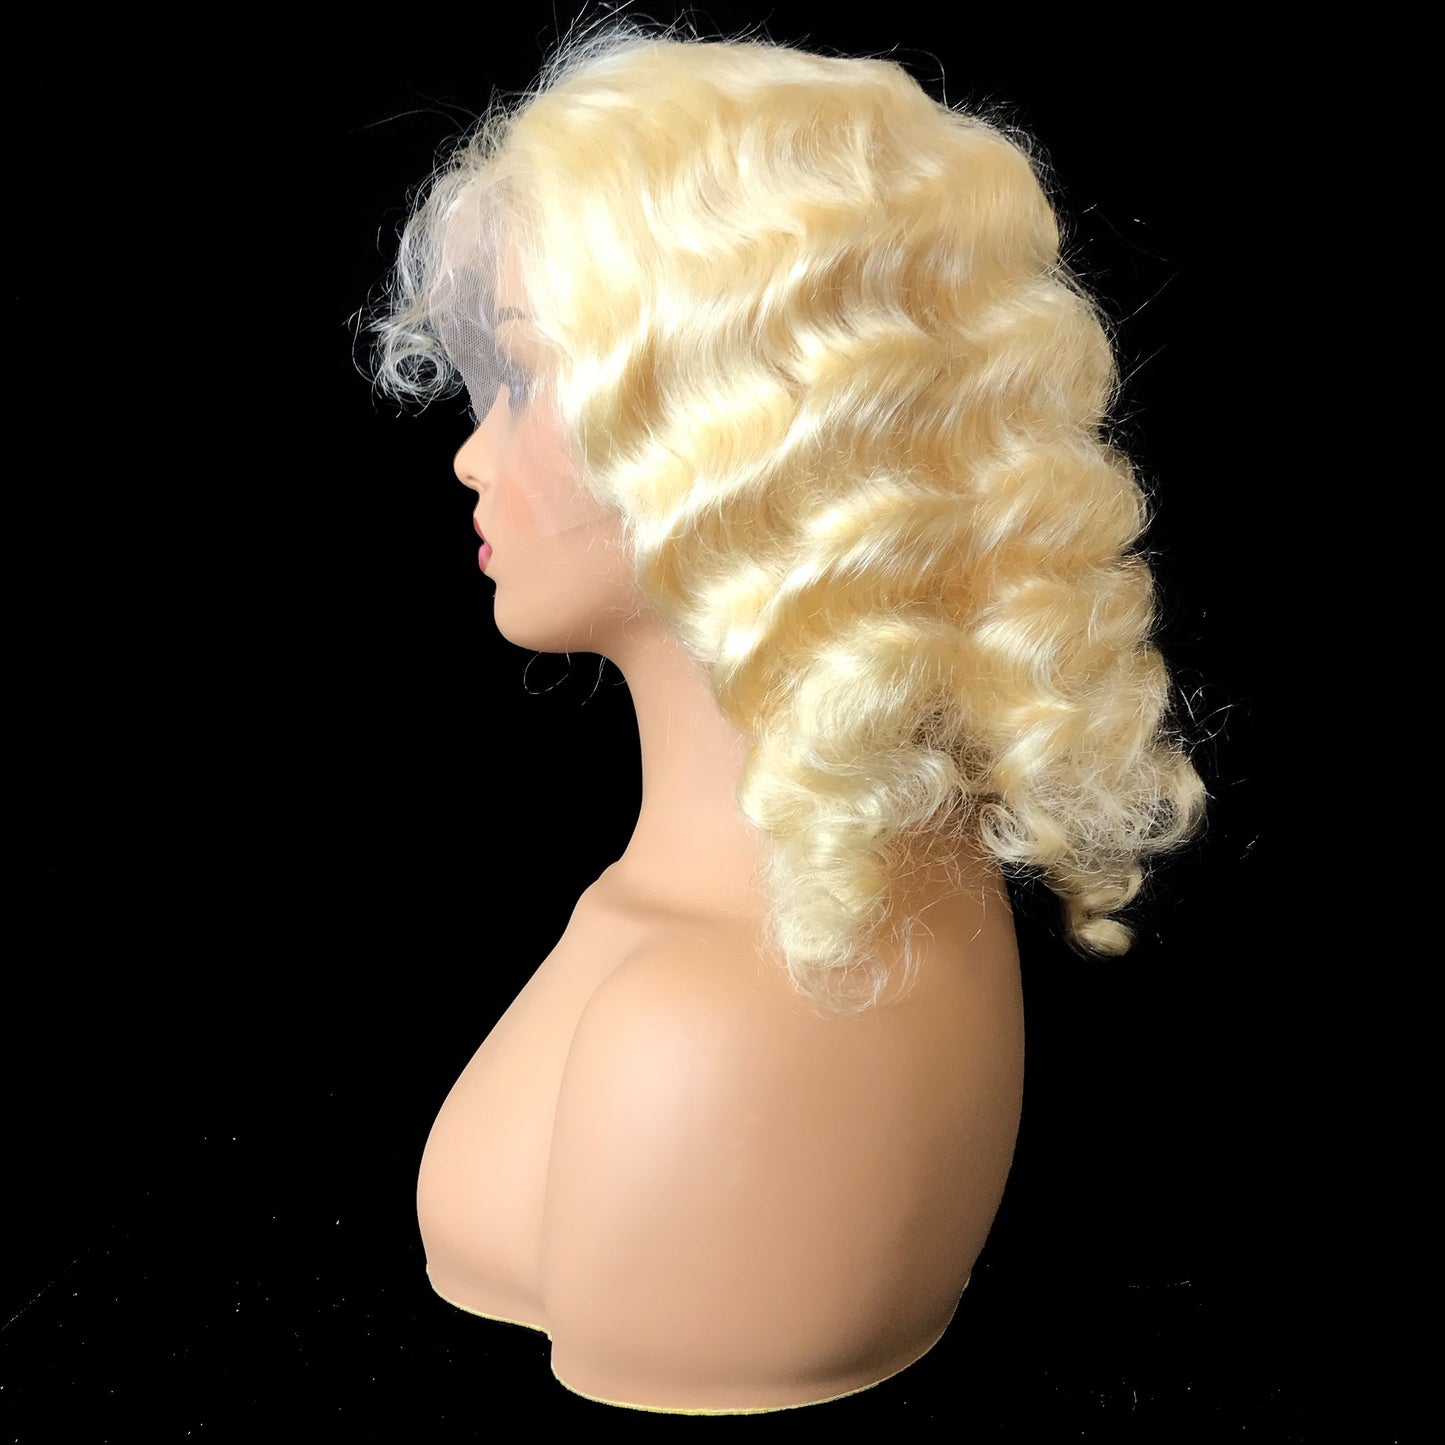 Deep Wave 13"X 4"Lace Frontal Bob Wig  Blonde #613